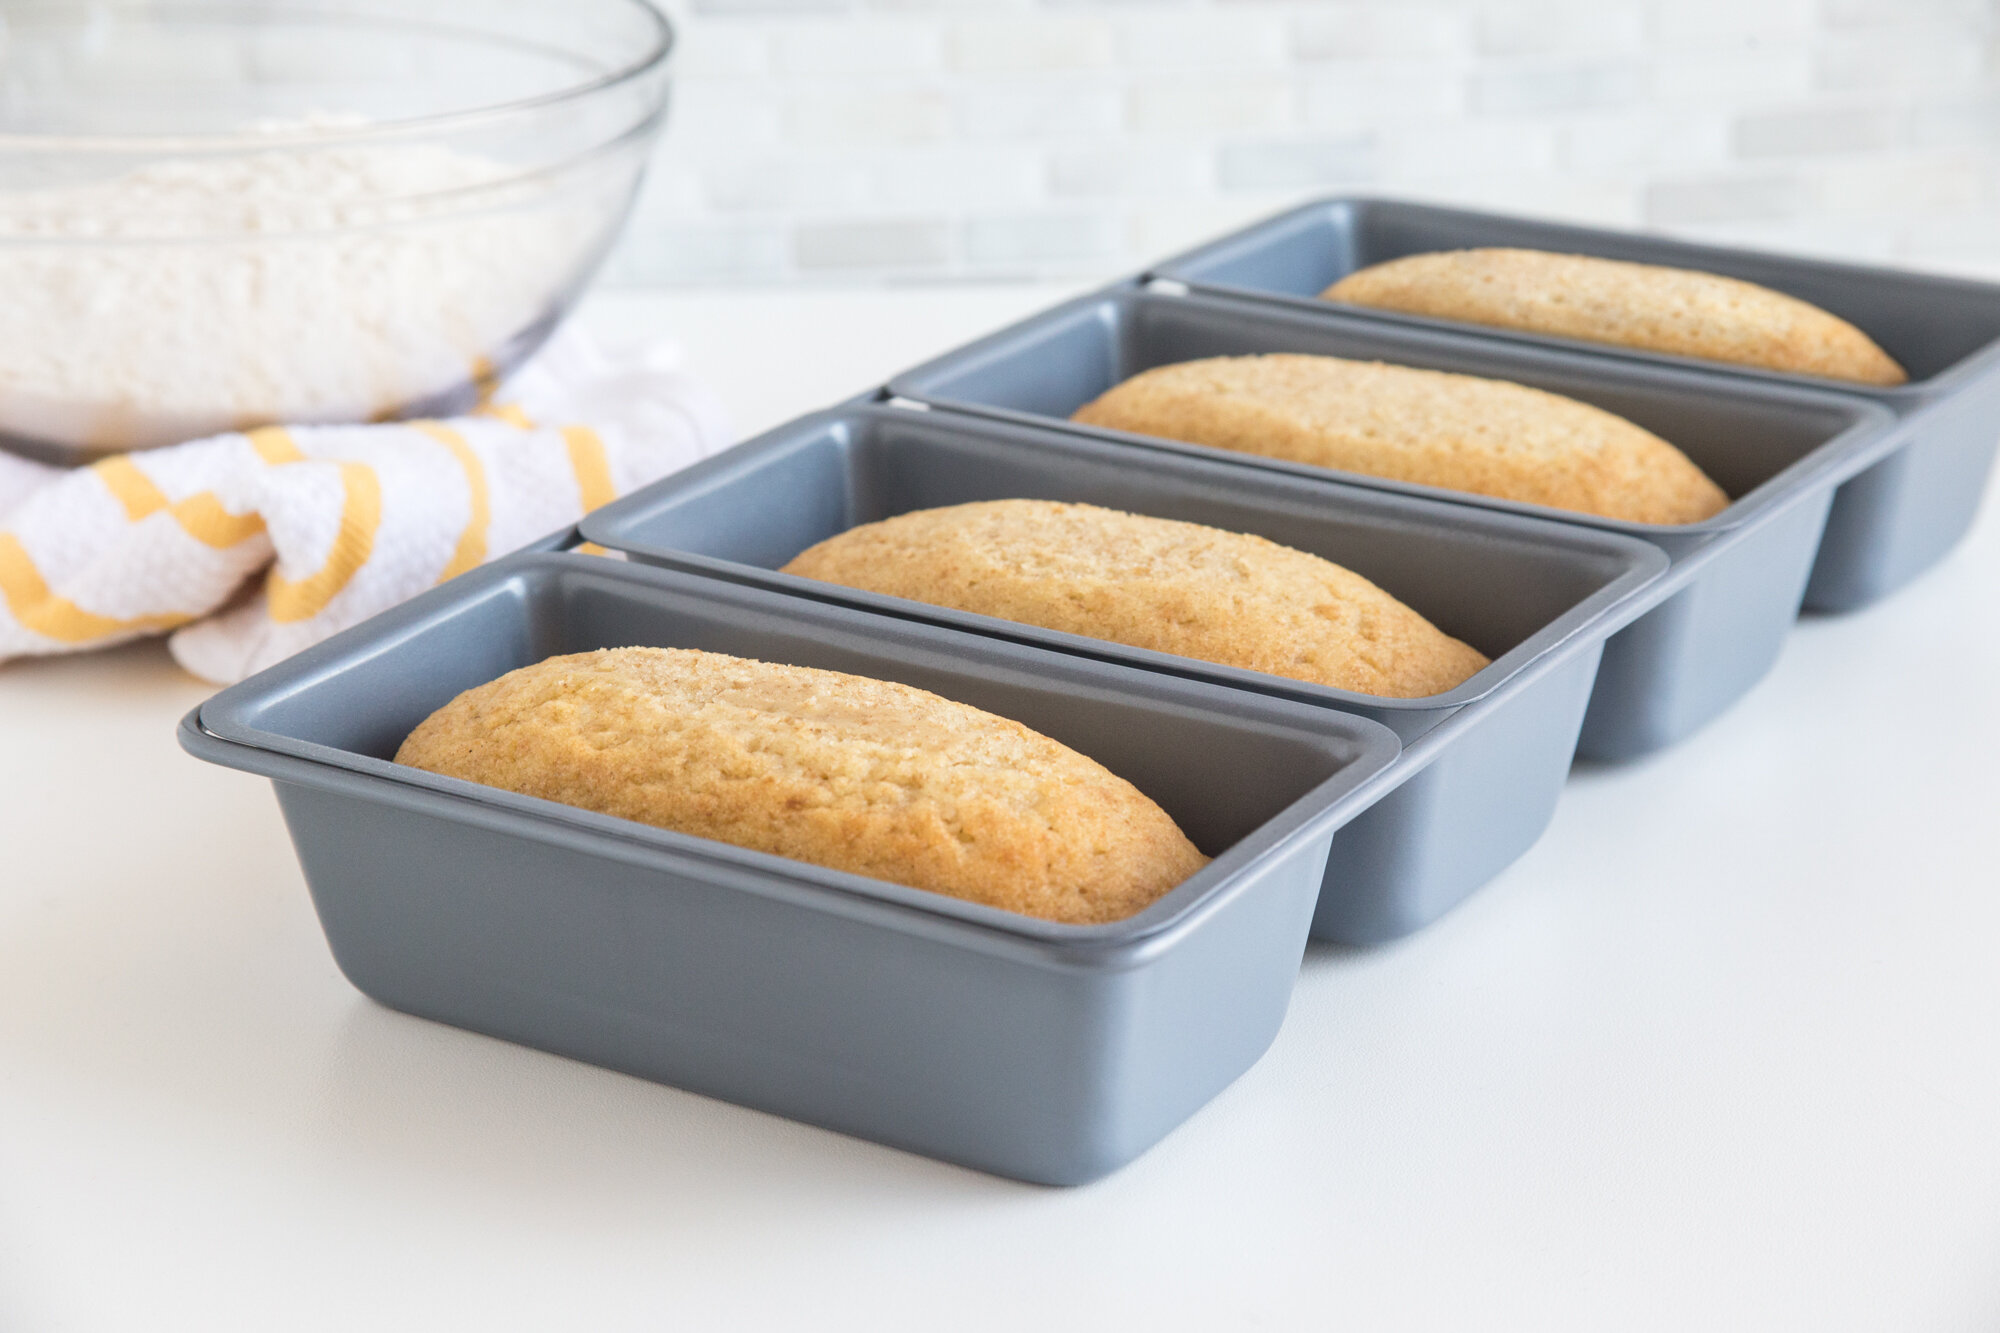 Mini Loaf Pan - Mini Bread/Loaf Pan, Non-Stick